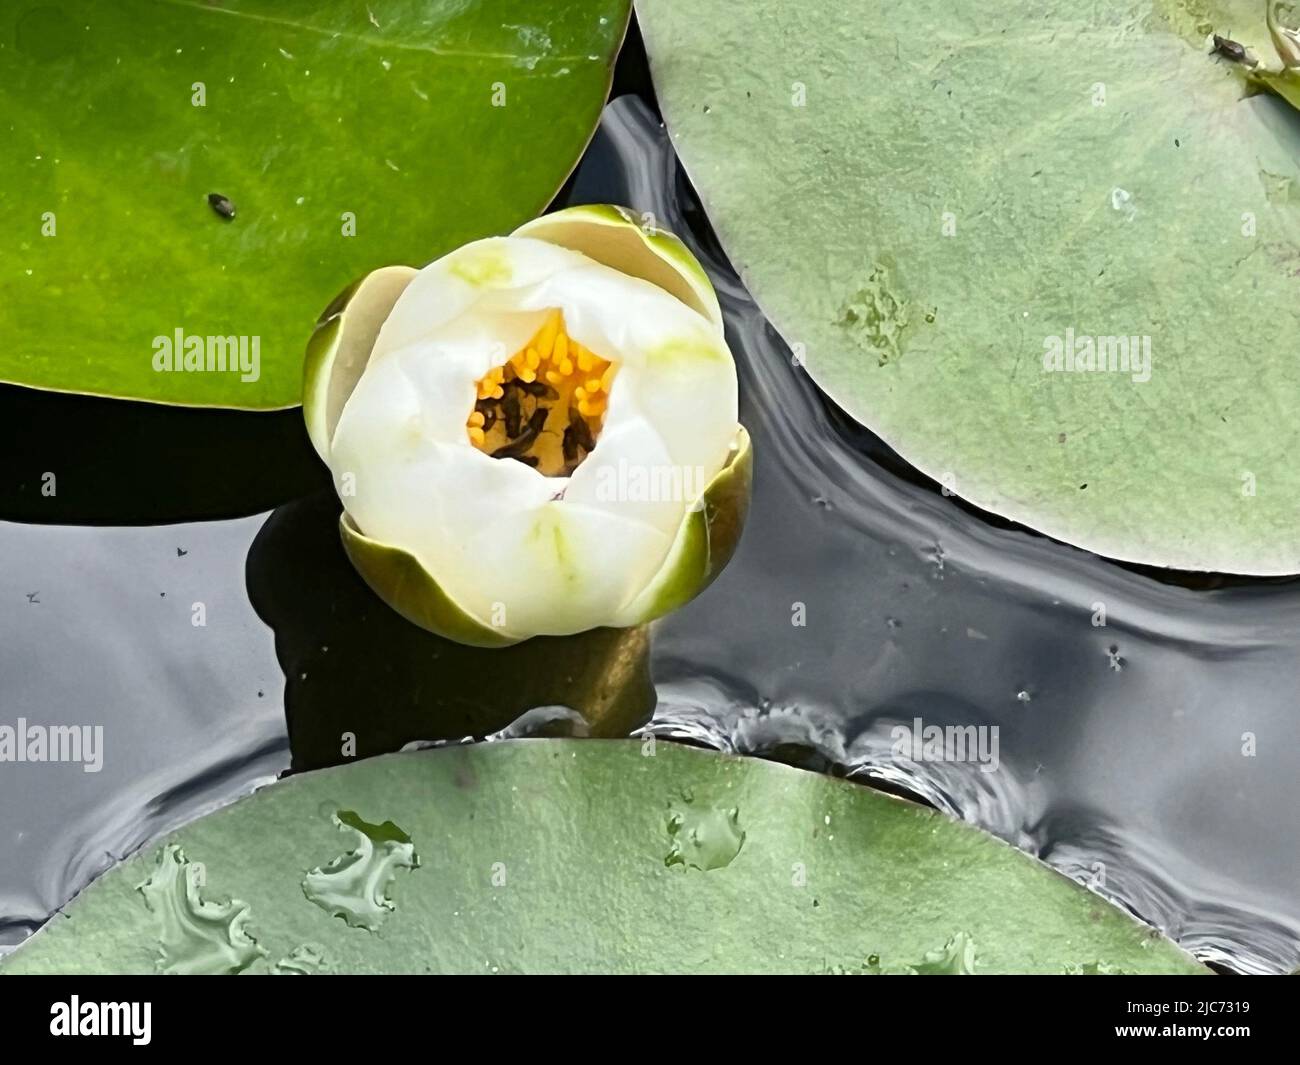 European white water lily, white water rose or white nenuphar - Nymphaea alba Syn. Nymphaea polystigma - Weiße Seerose - nénuphar blanc ou nénufar bla Stock Photo